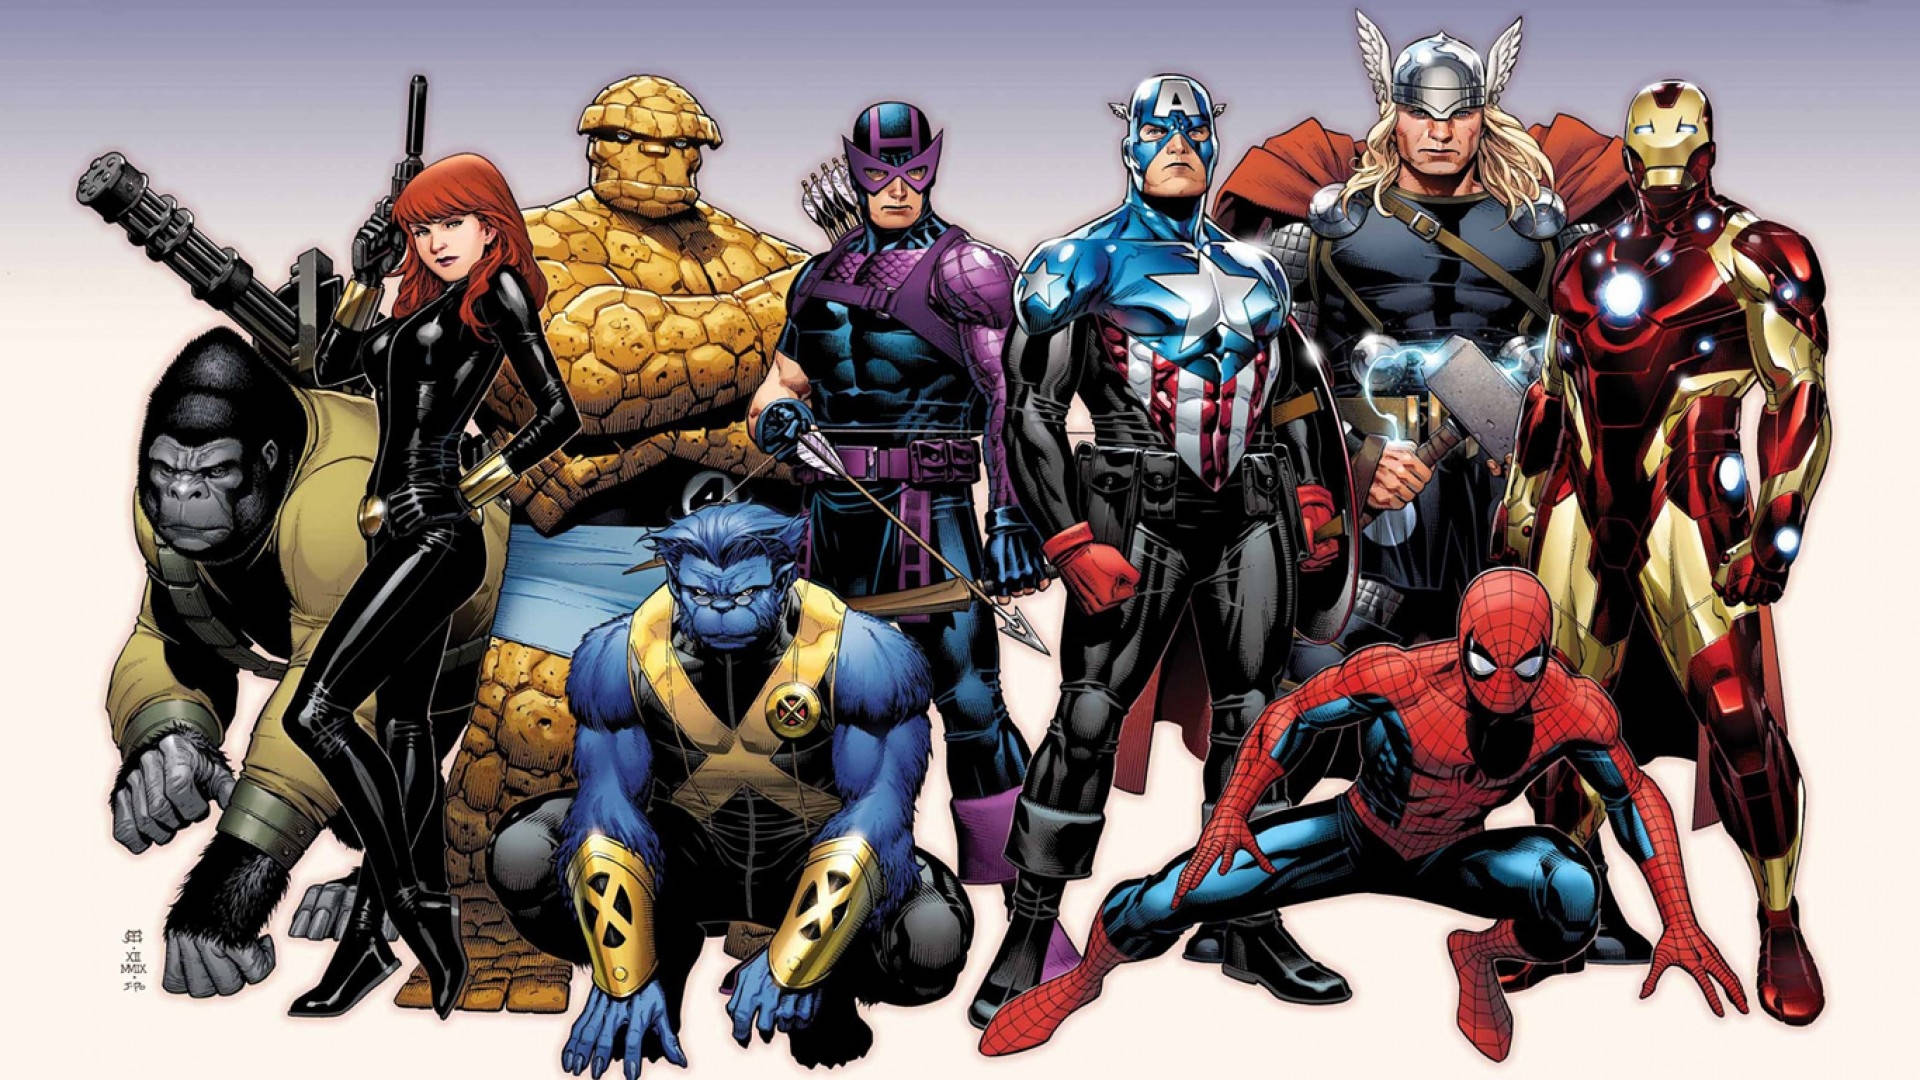 Marvel Superheroes Avengers And X-men